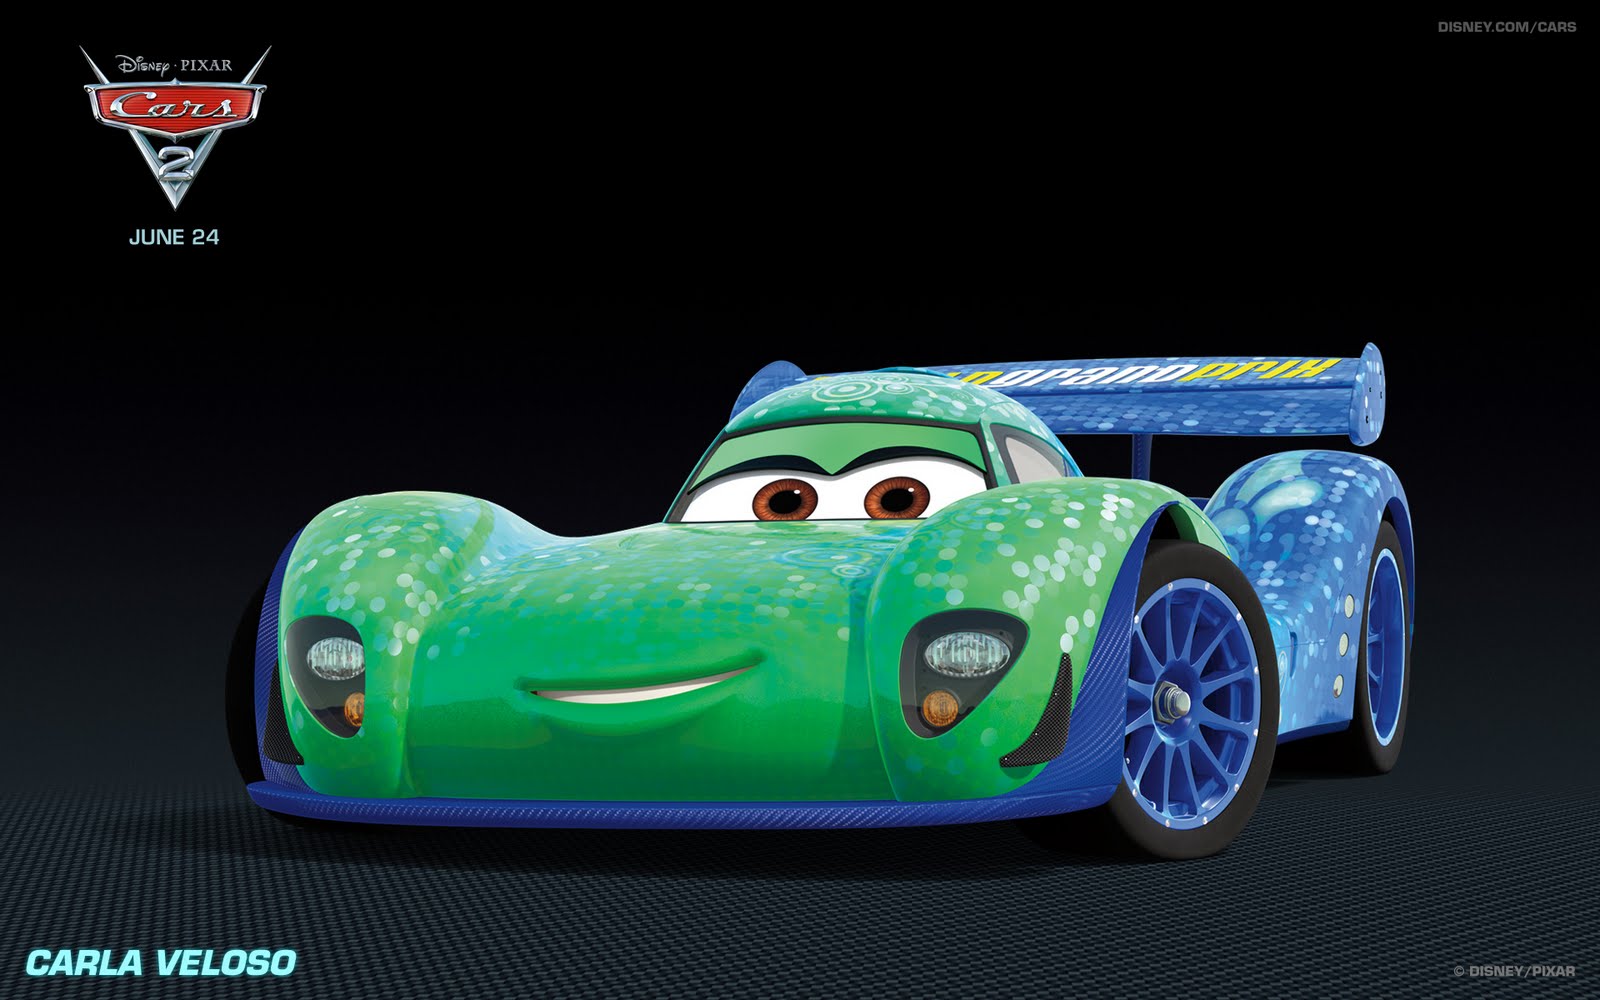 Disney Cars 2 Toys